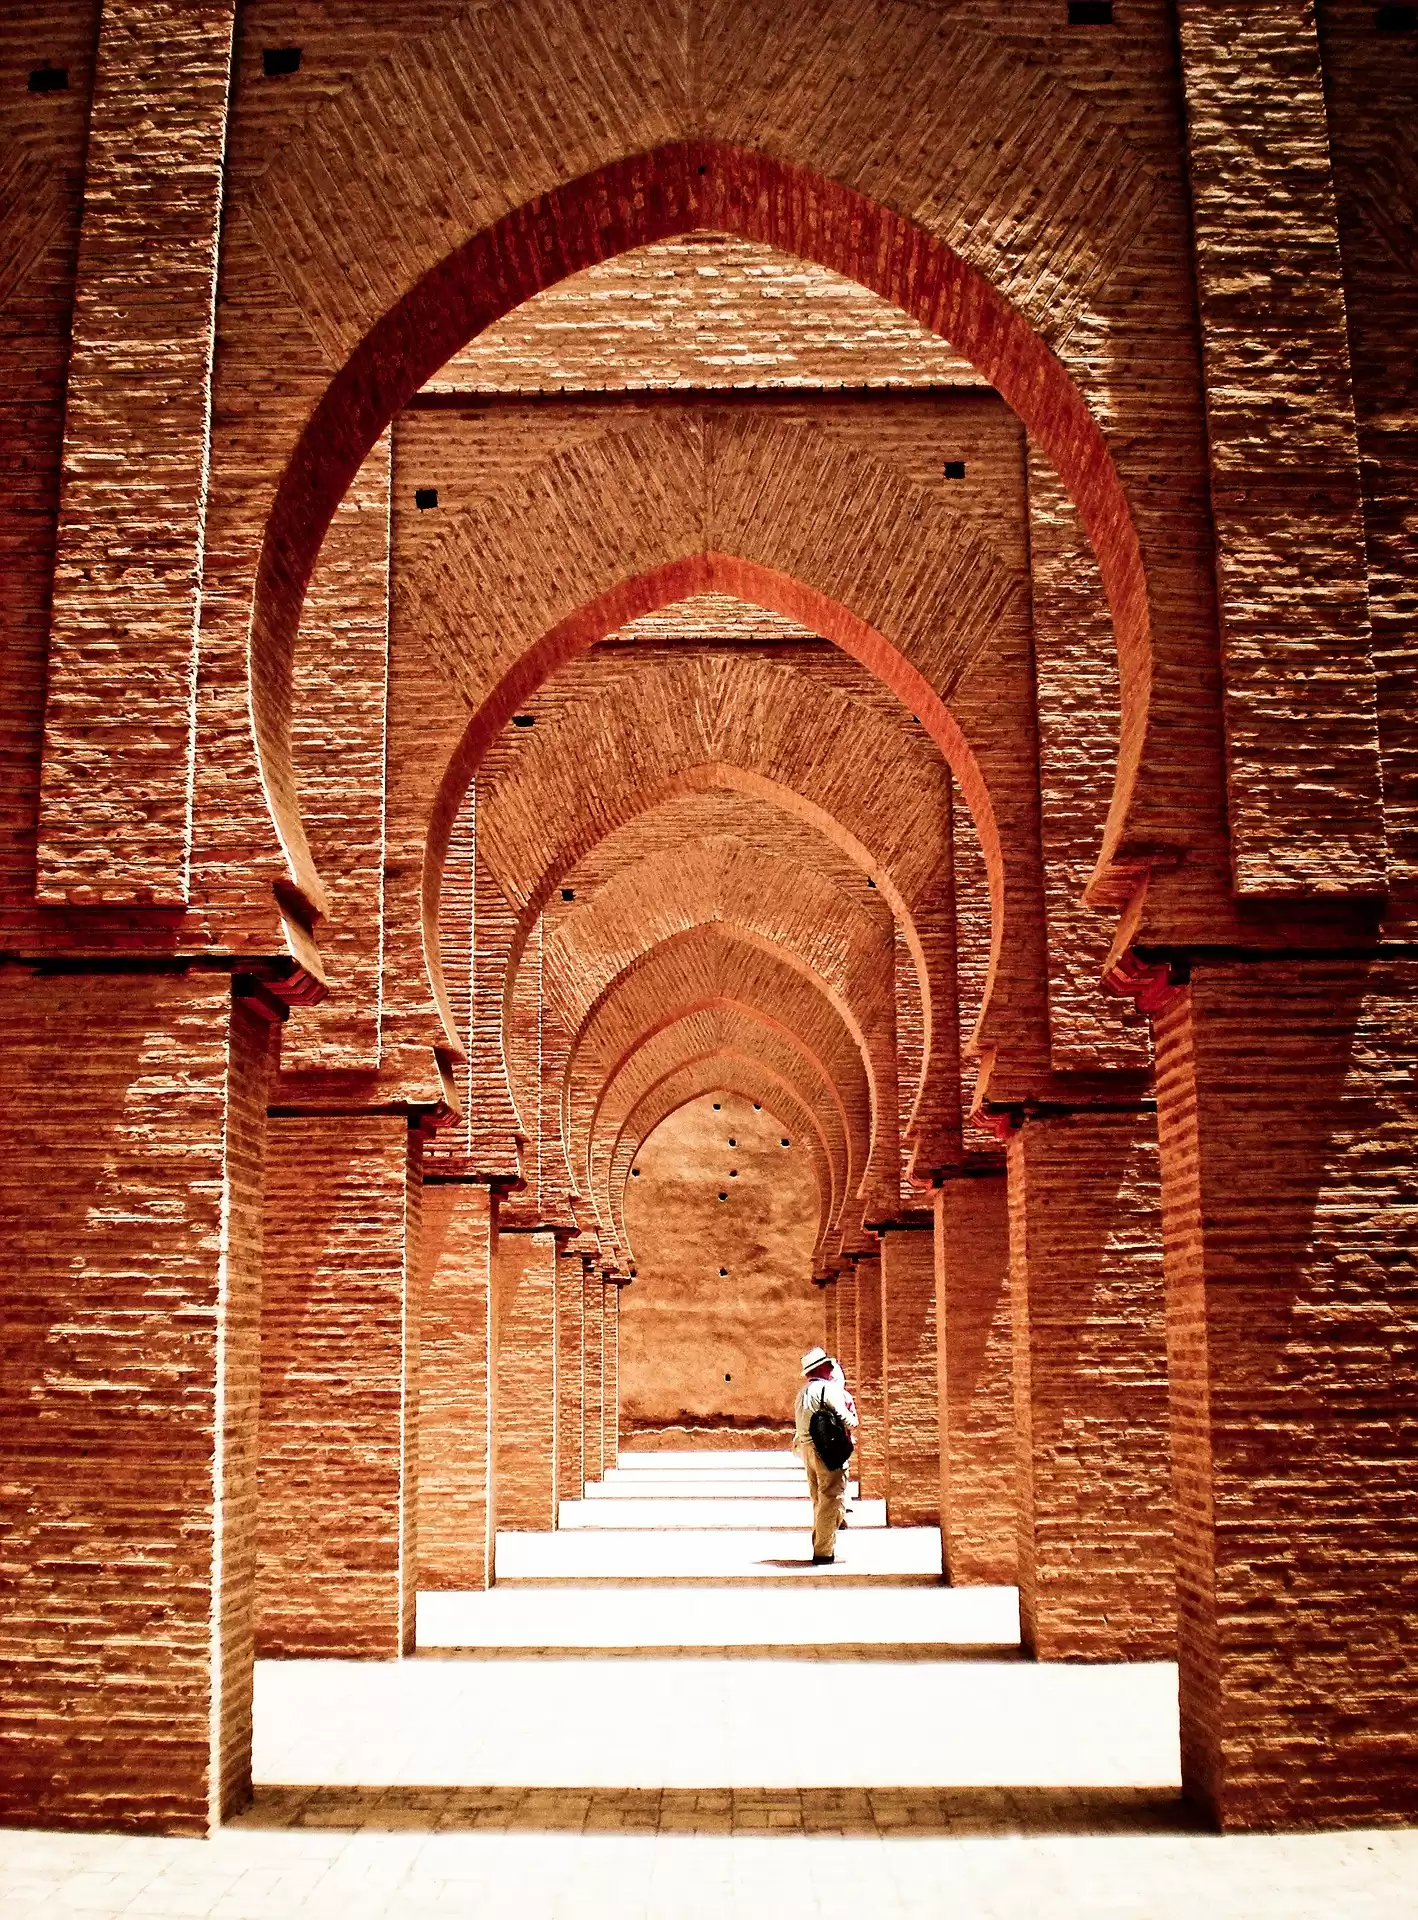 Célébration de l'Aïd Al Adha au Maroc : Un voyage spirituel et culturel